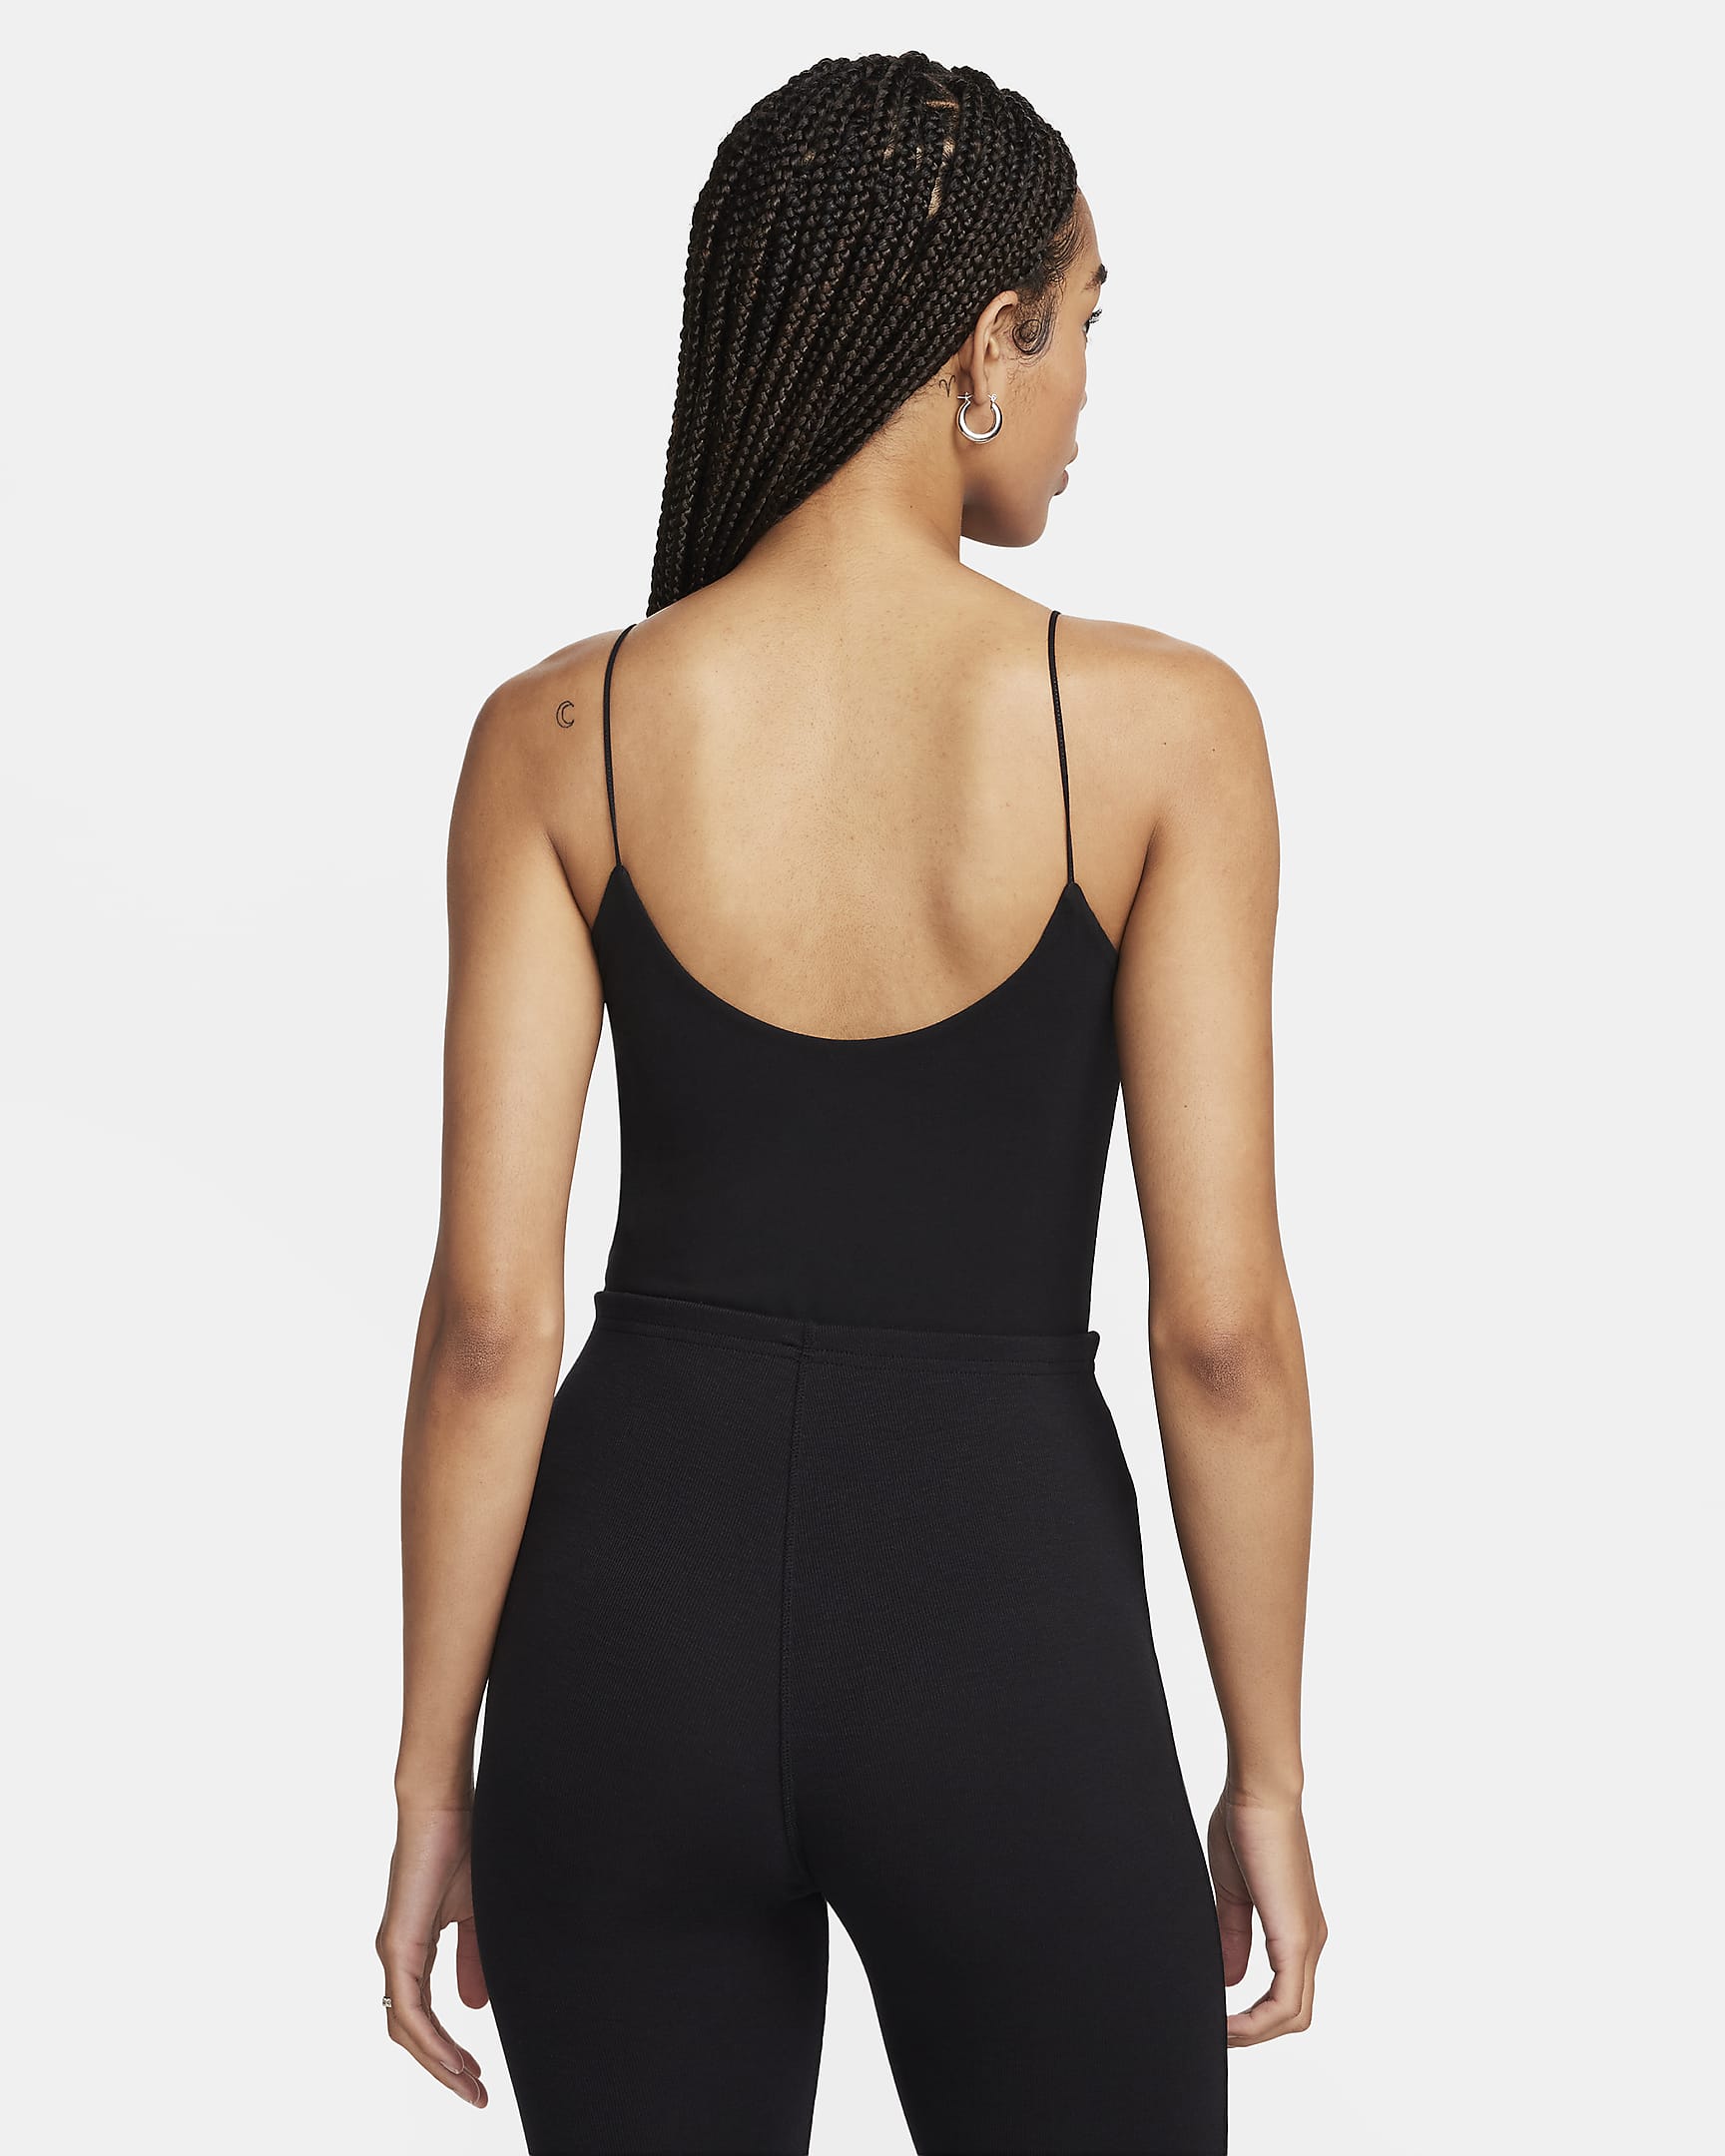 Nike Sportswear Chill Knit Women's Tight Cami Bodysuit. Nike HR